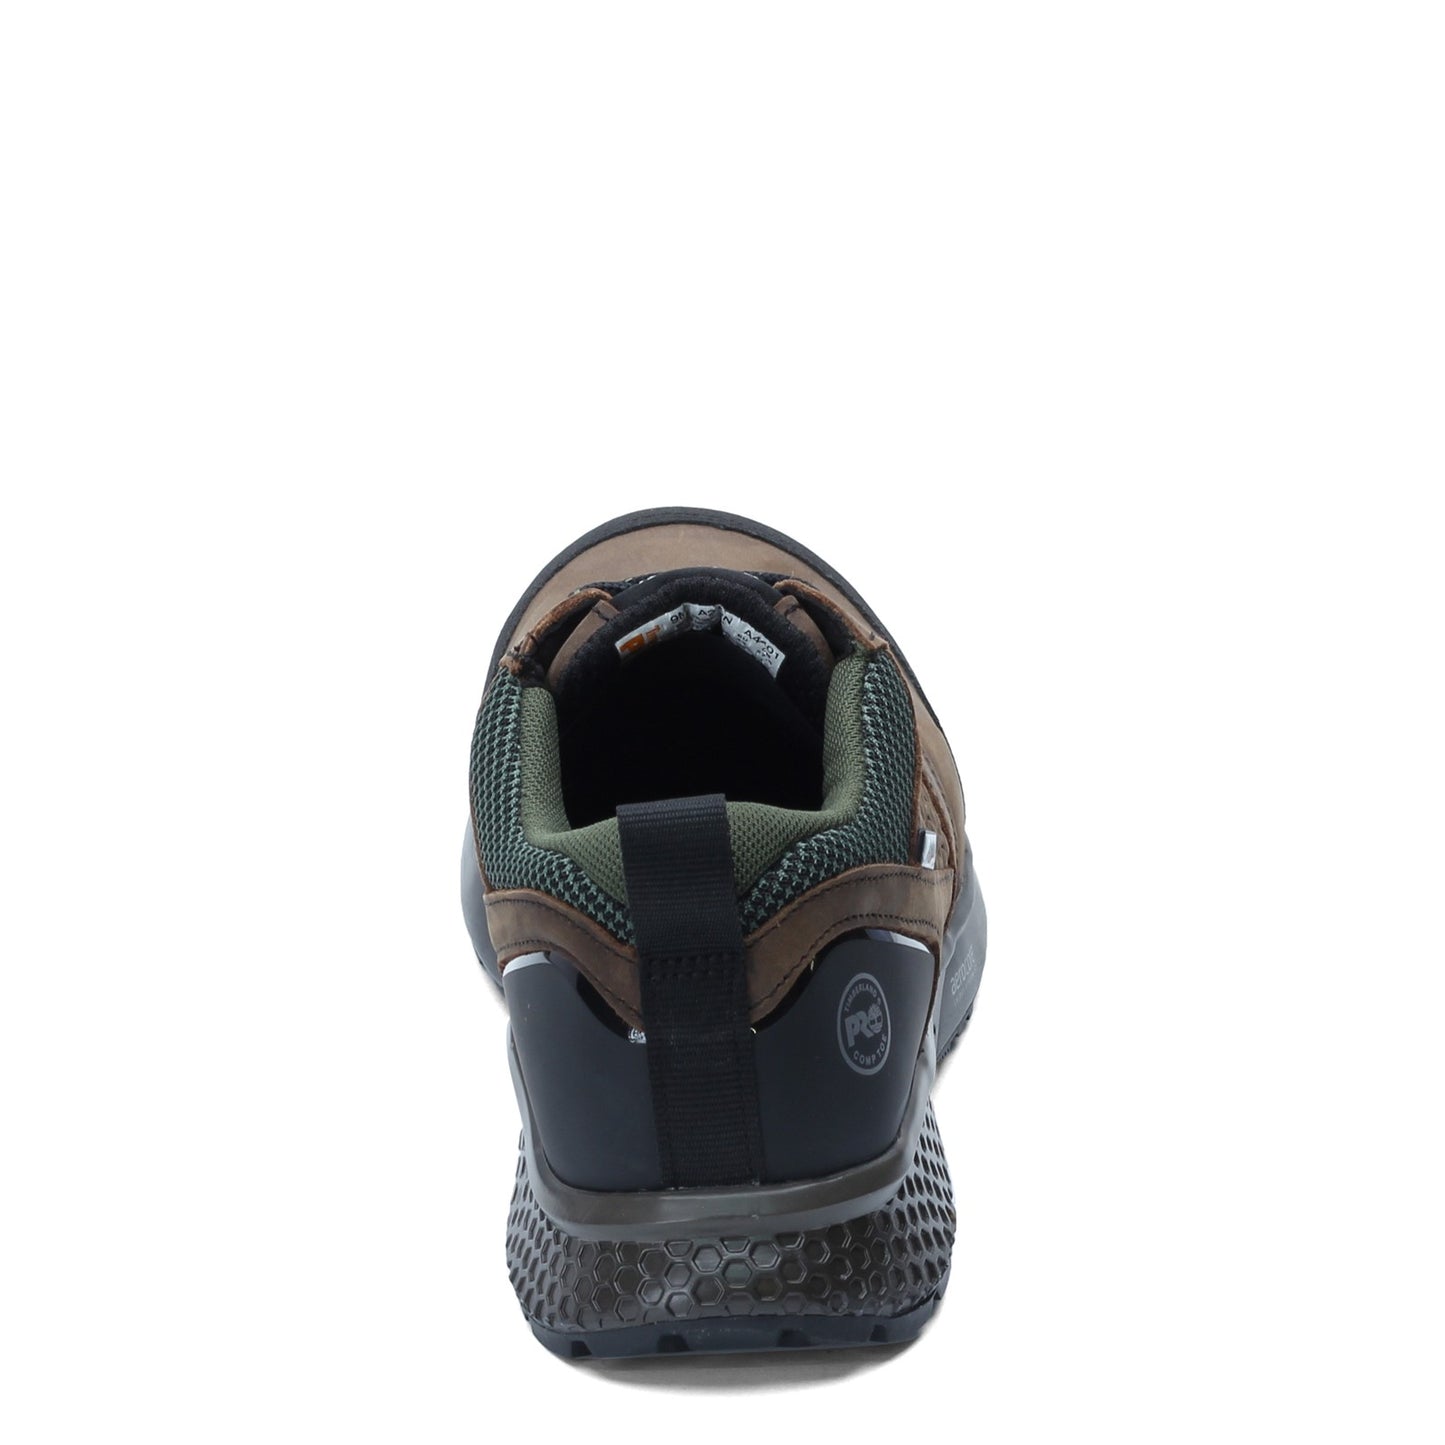 Peltz Shoes  Men's Timberland Pro Reaxion Low Comp Toe Work Shoe BROWN GREEN TB0A21PN214